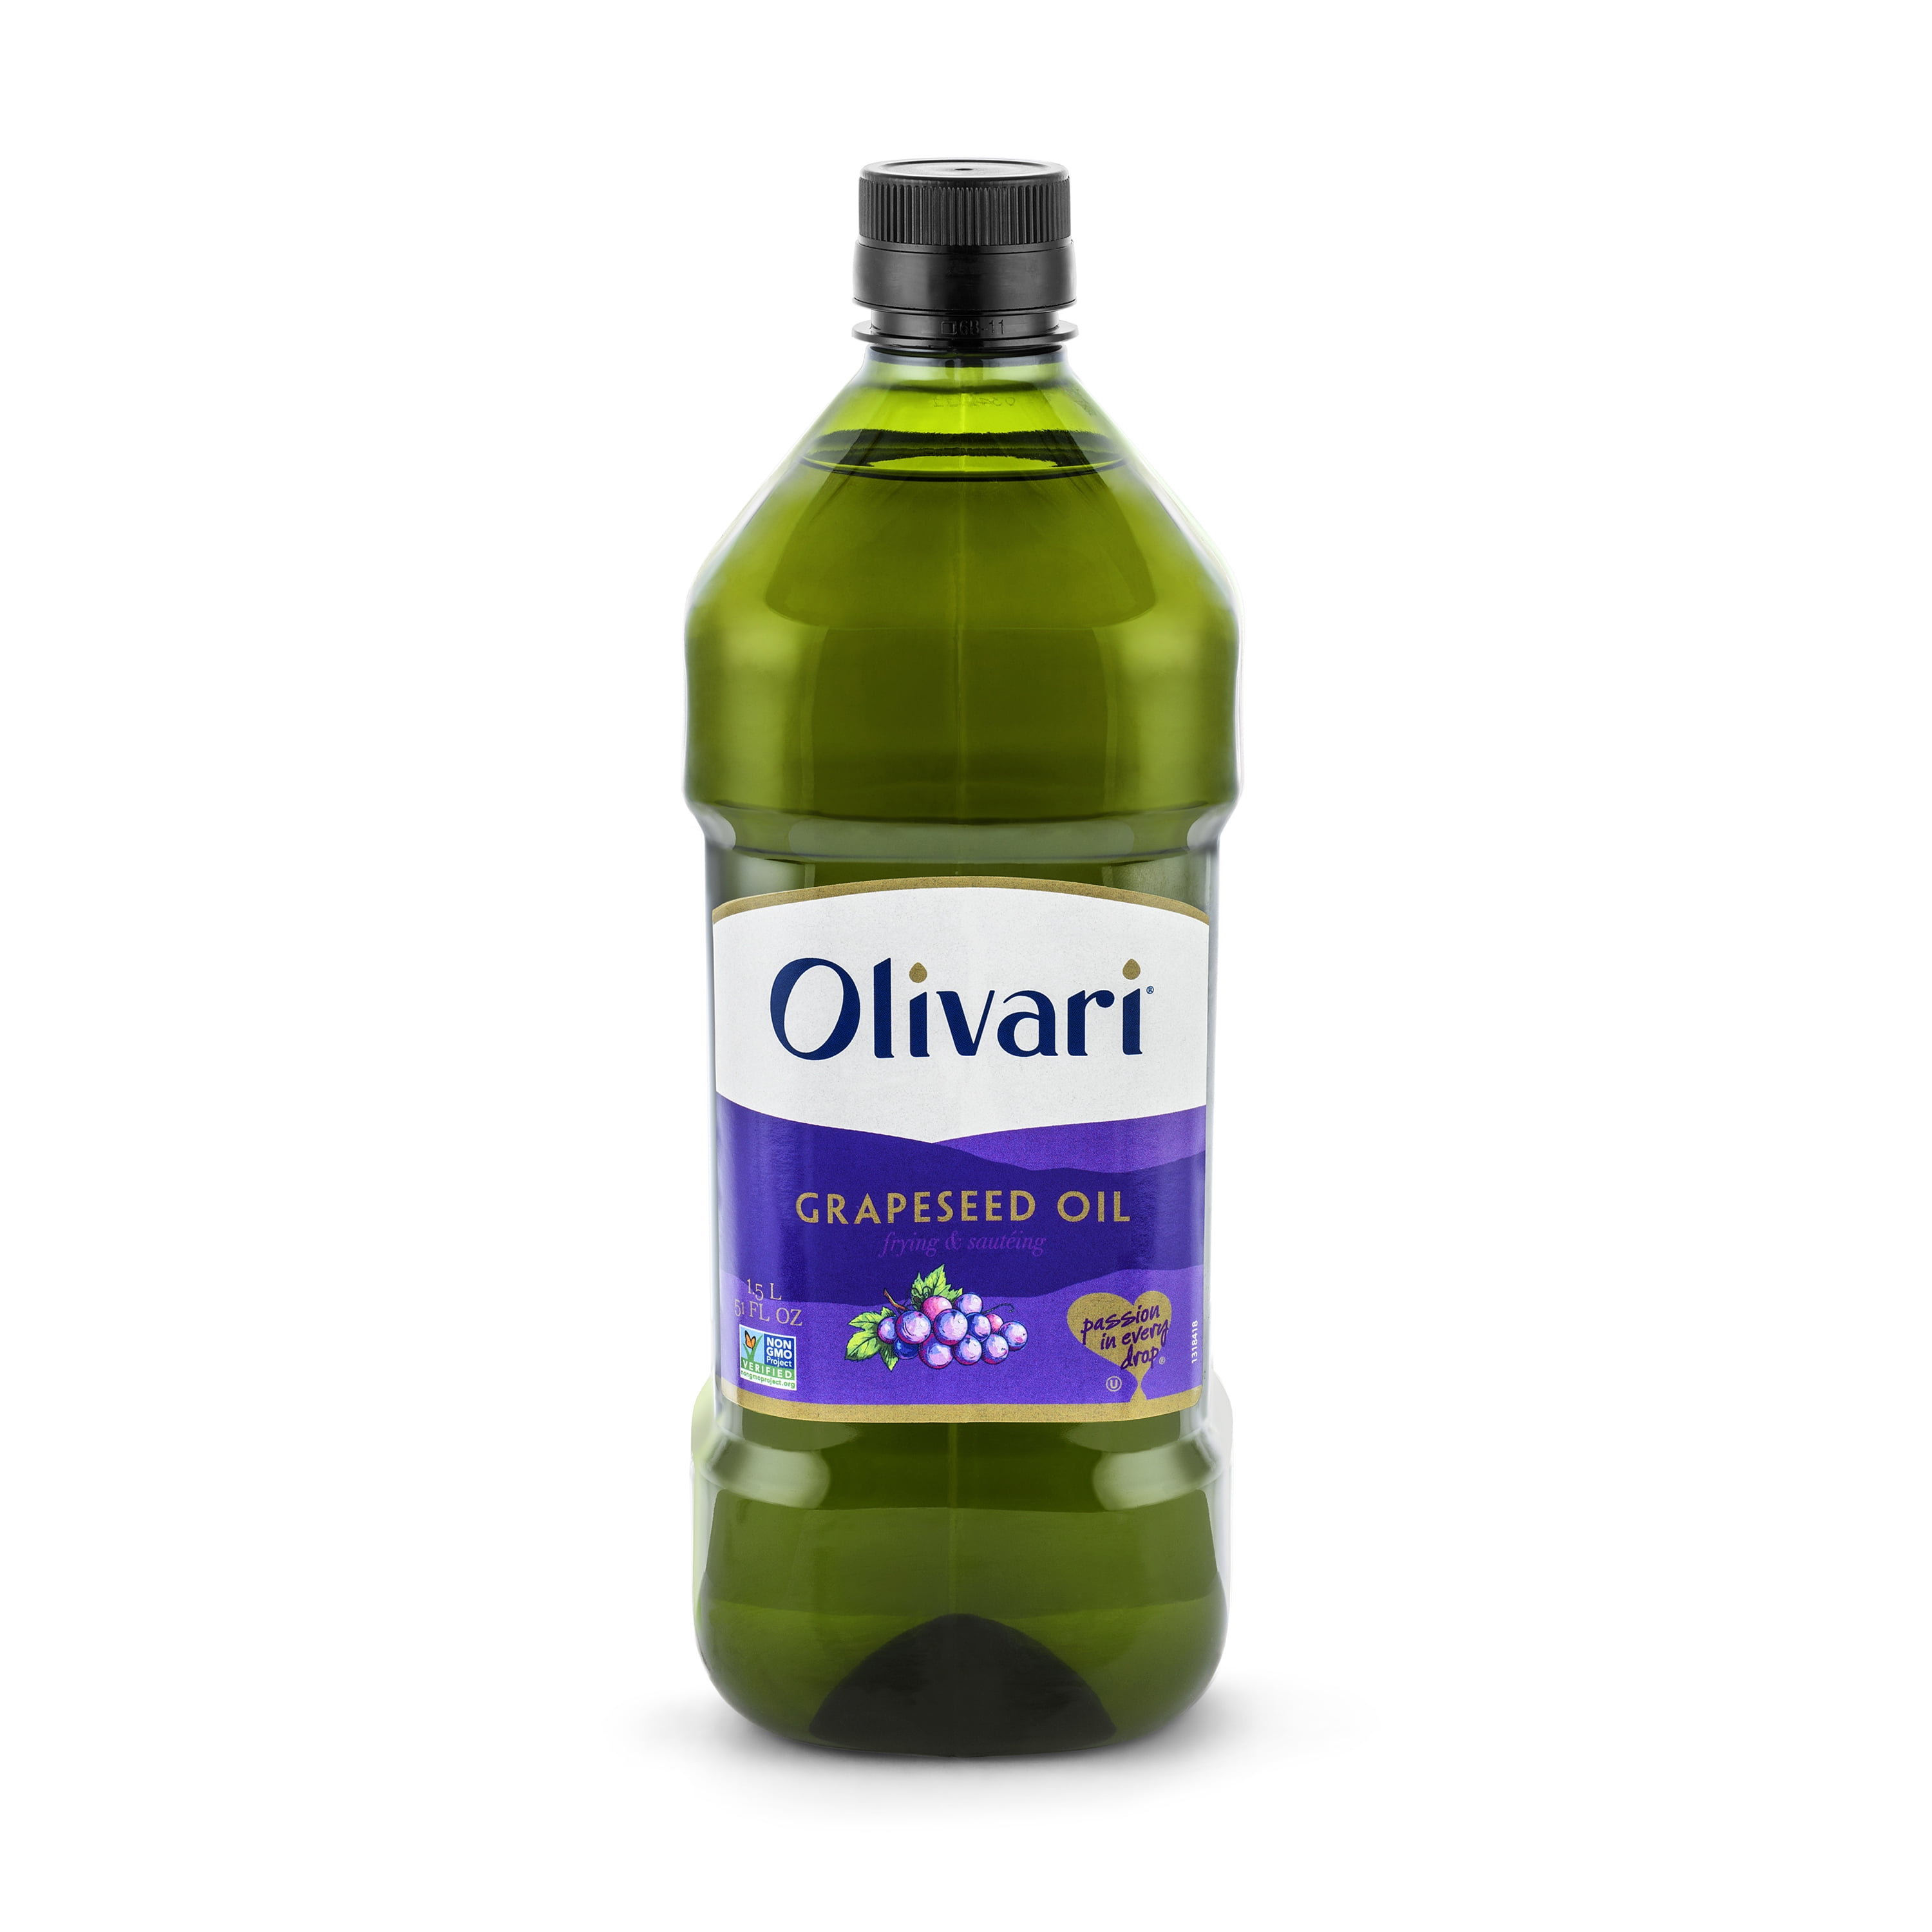 Olivari Grapeseed Oil for Frying and Sauteing, 51 fl oz Plastic Bottle